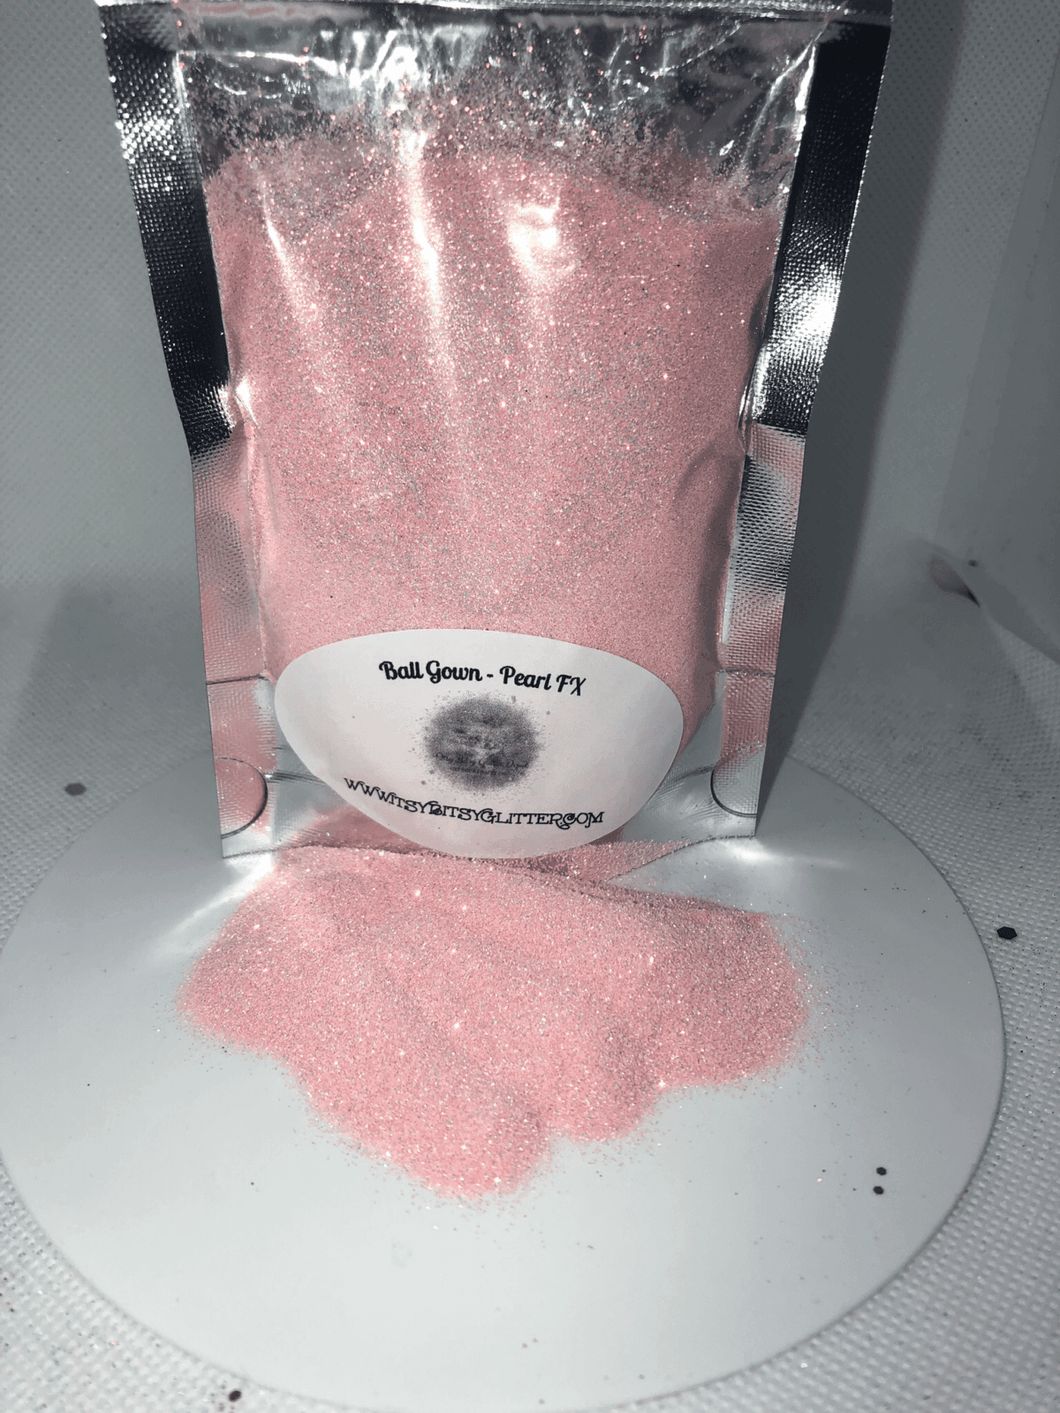 Ball gown Super FX Effects Shimmer - Main glitter site 